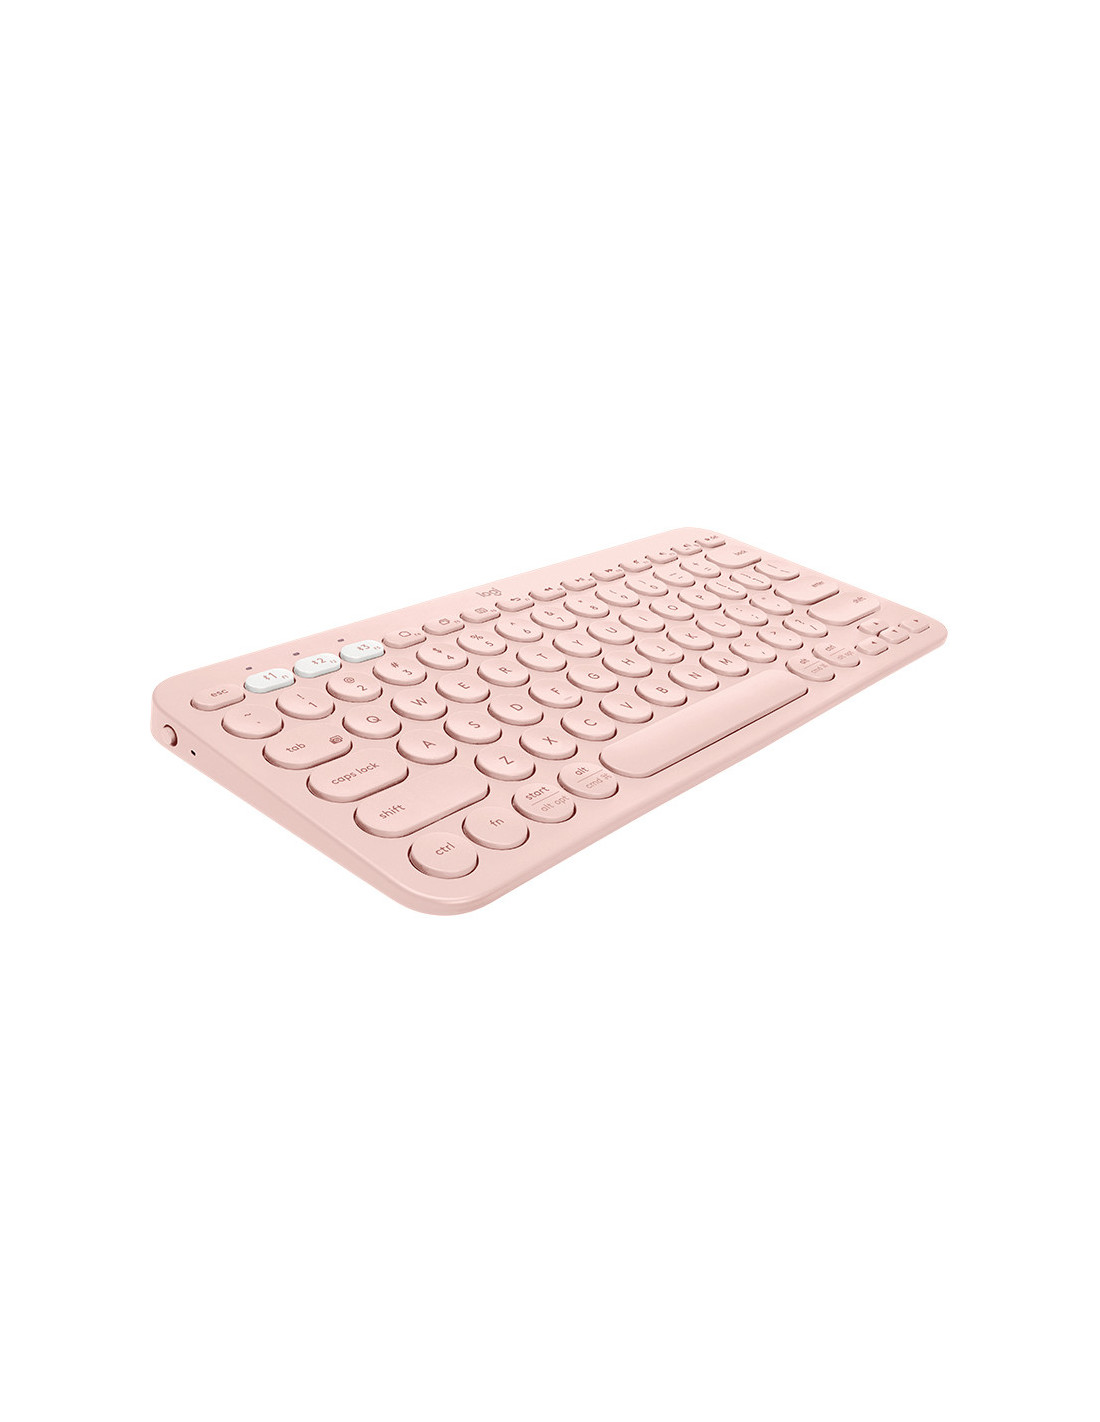 Logitech K380 Wireless Keyboard - Pink (Spanish)